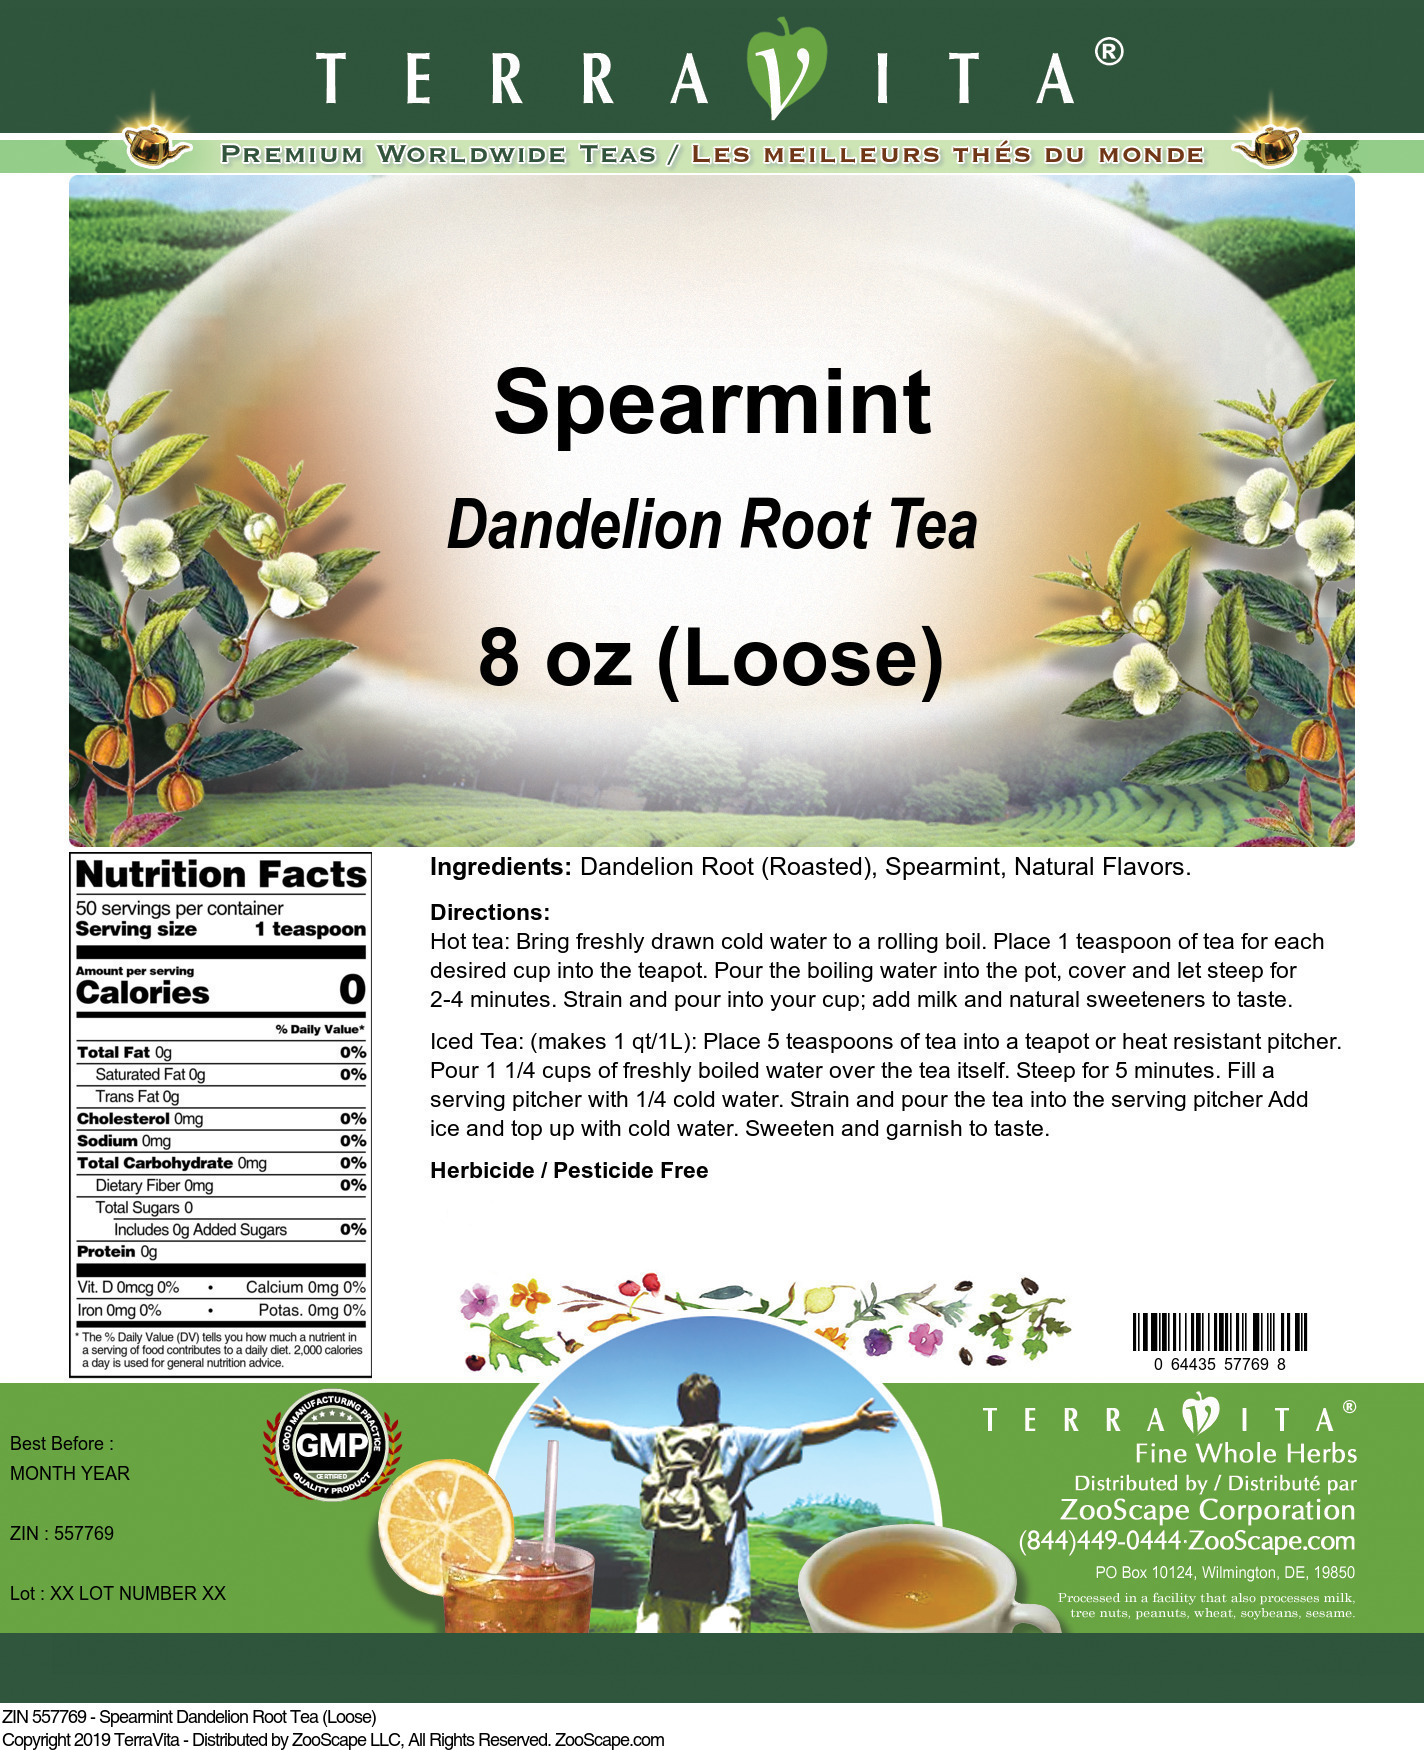 Spearmint Dandelion Root Tea (Loose) - Label